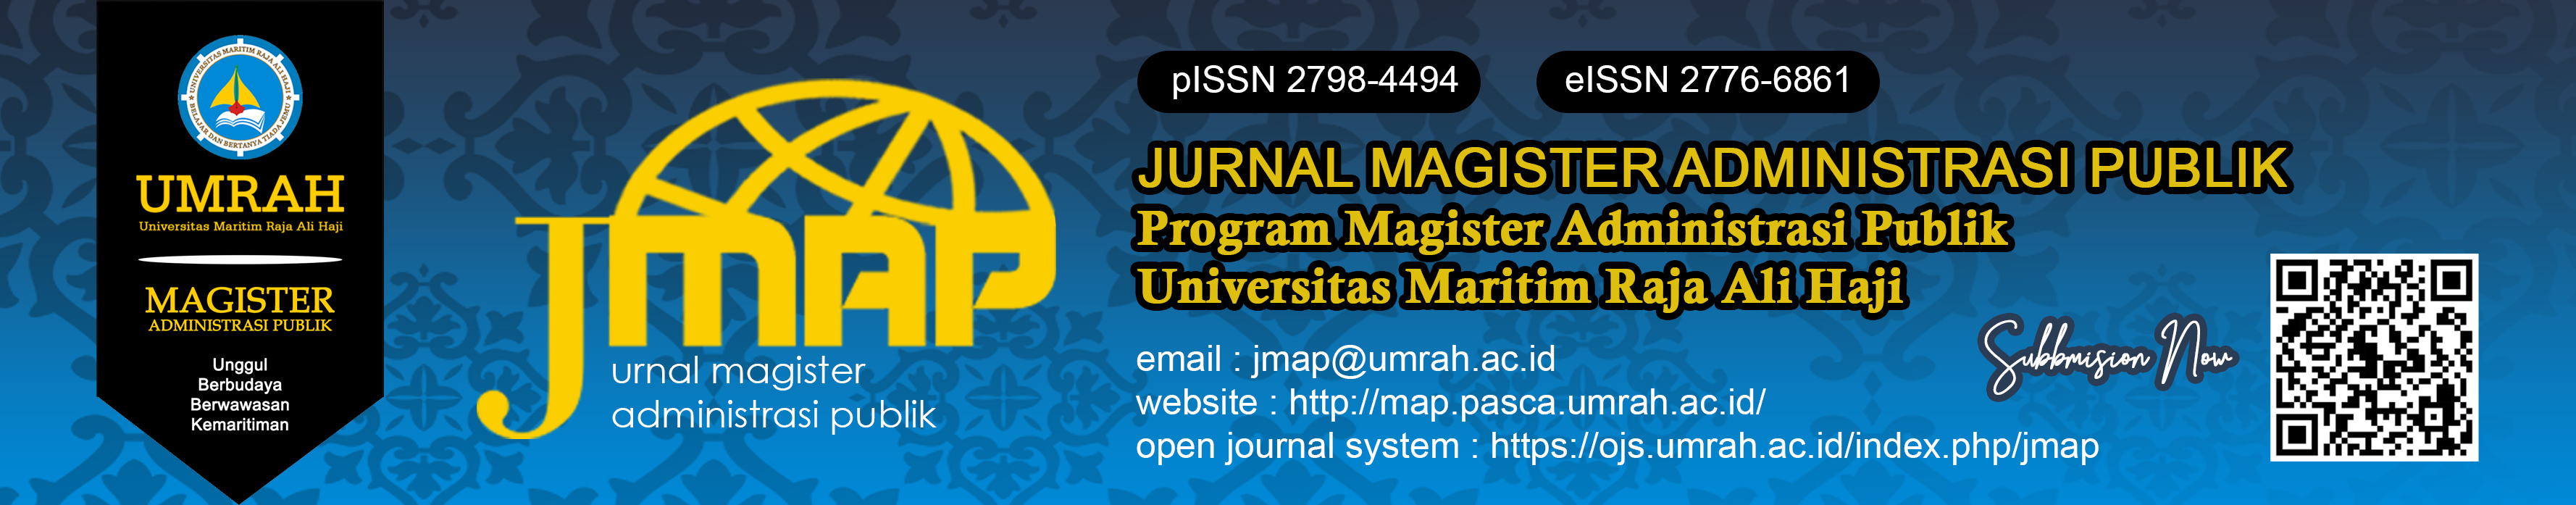 Jurnal Magister Administrasi Publik (JMAP)